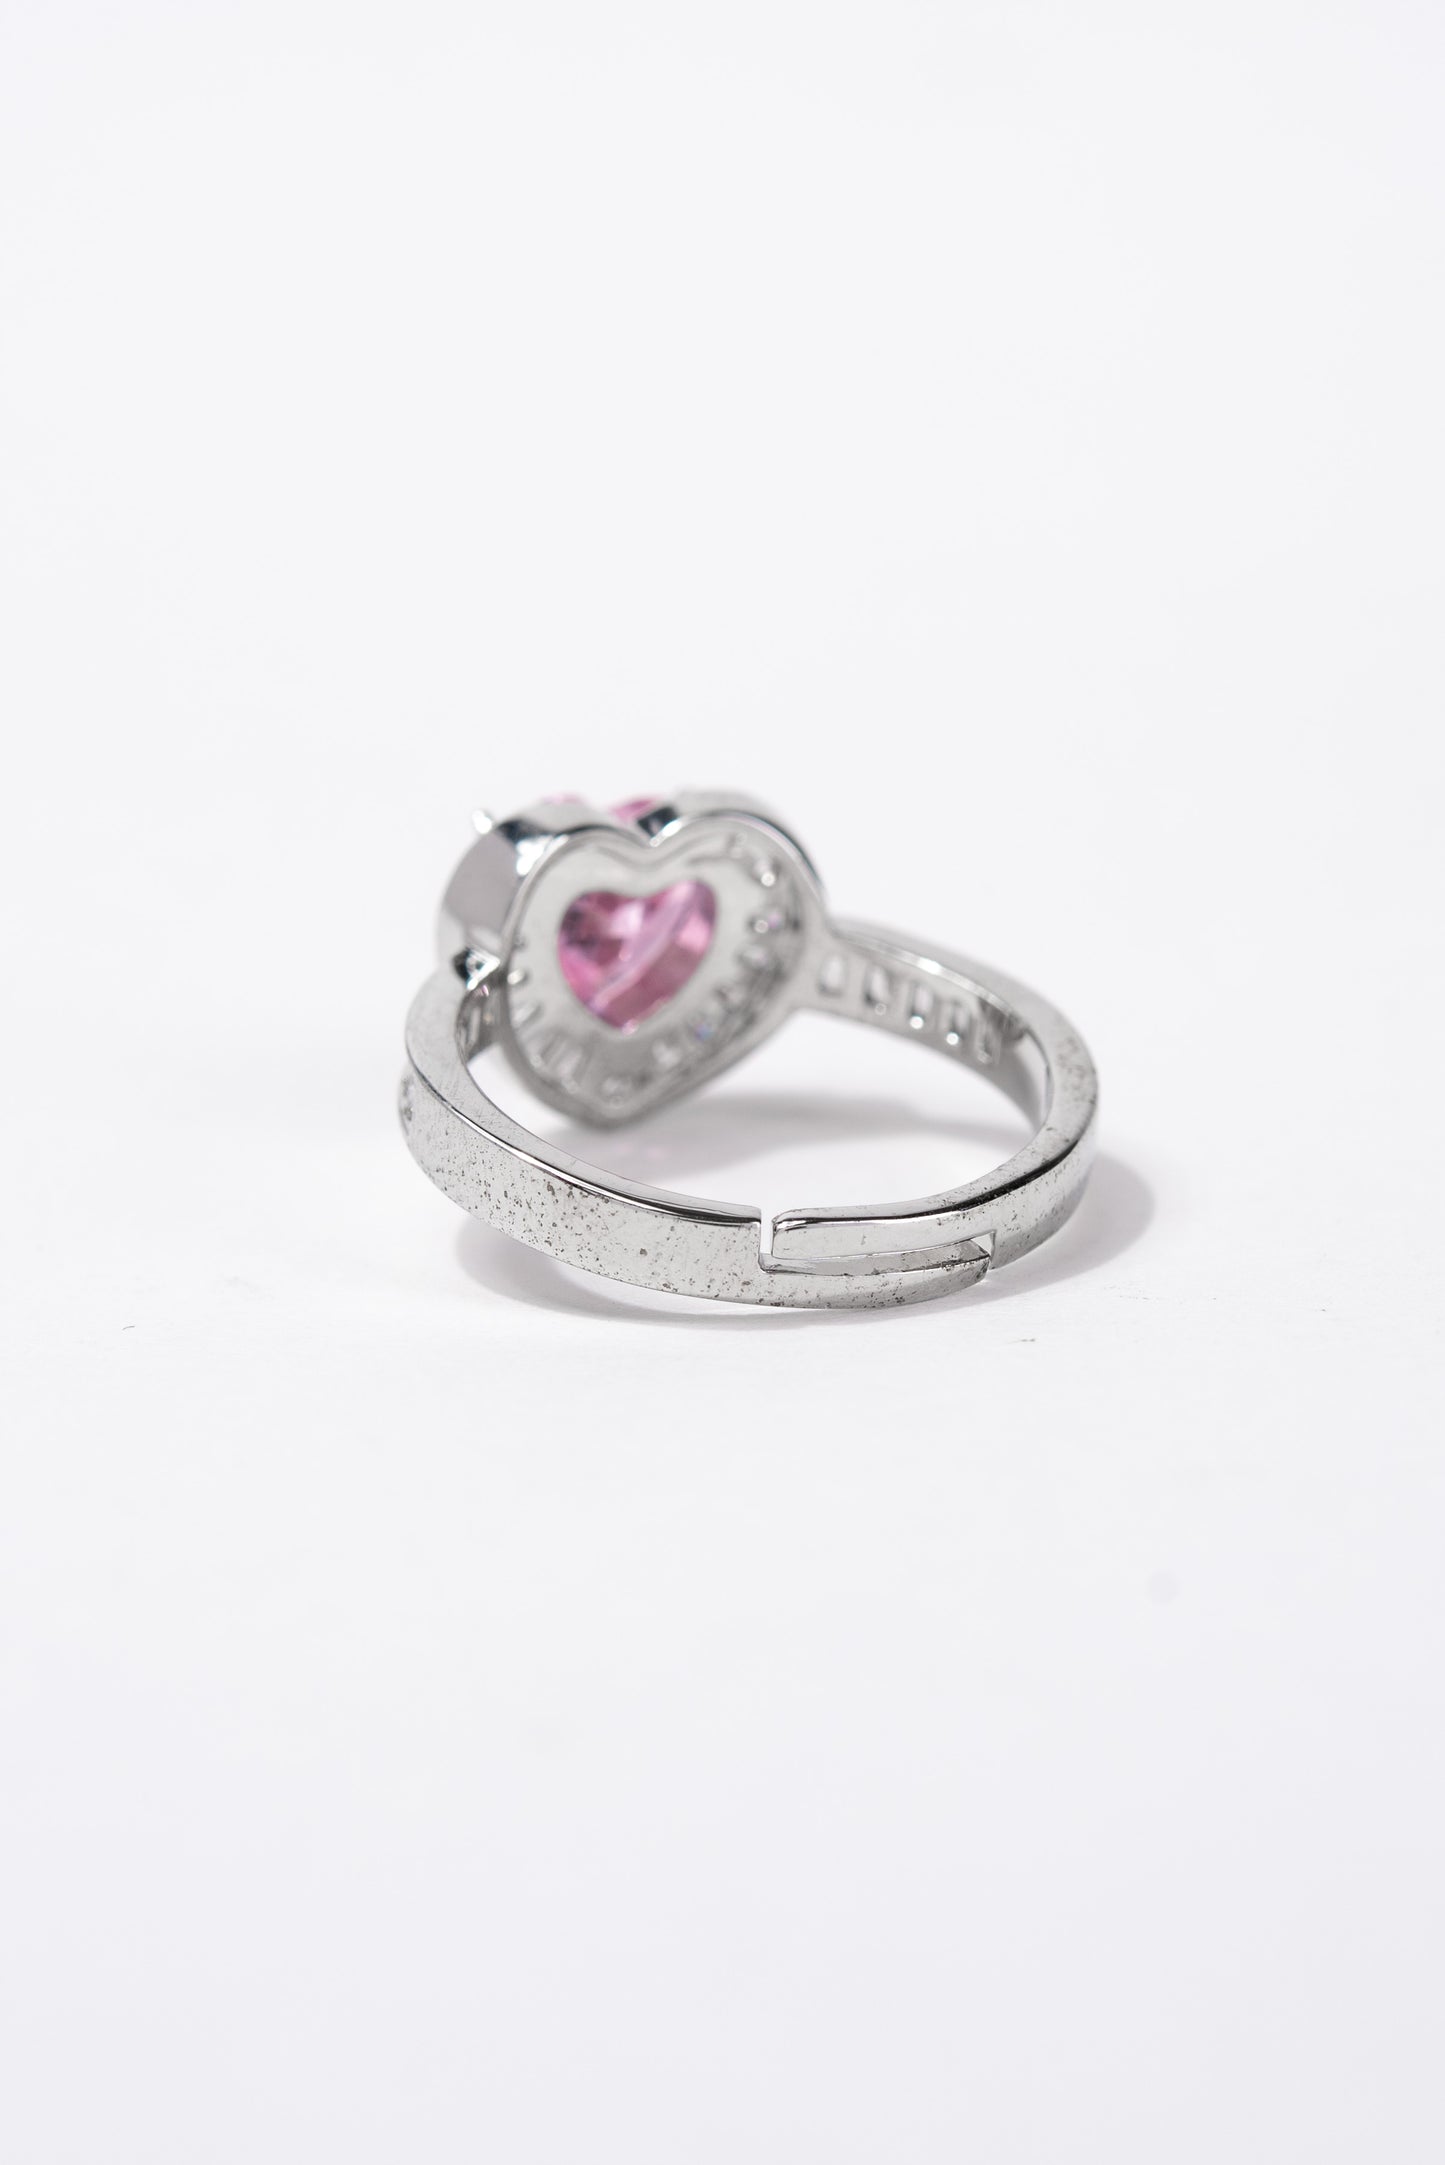 Lilly Heart CZ Rhinestone Ring